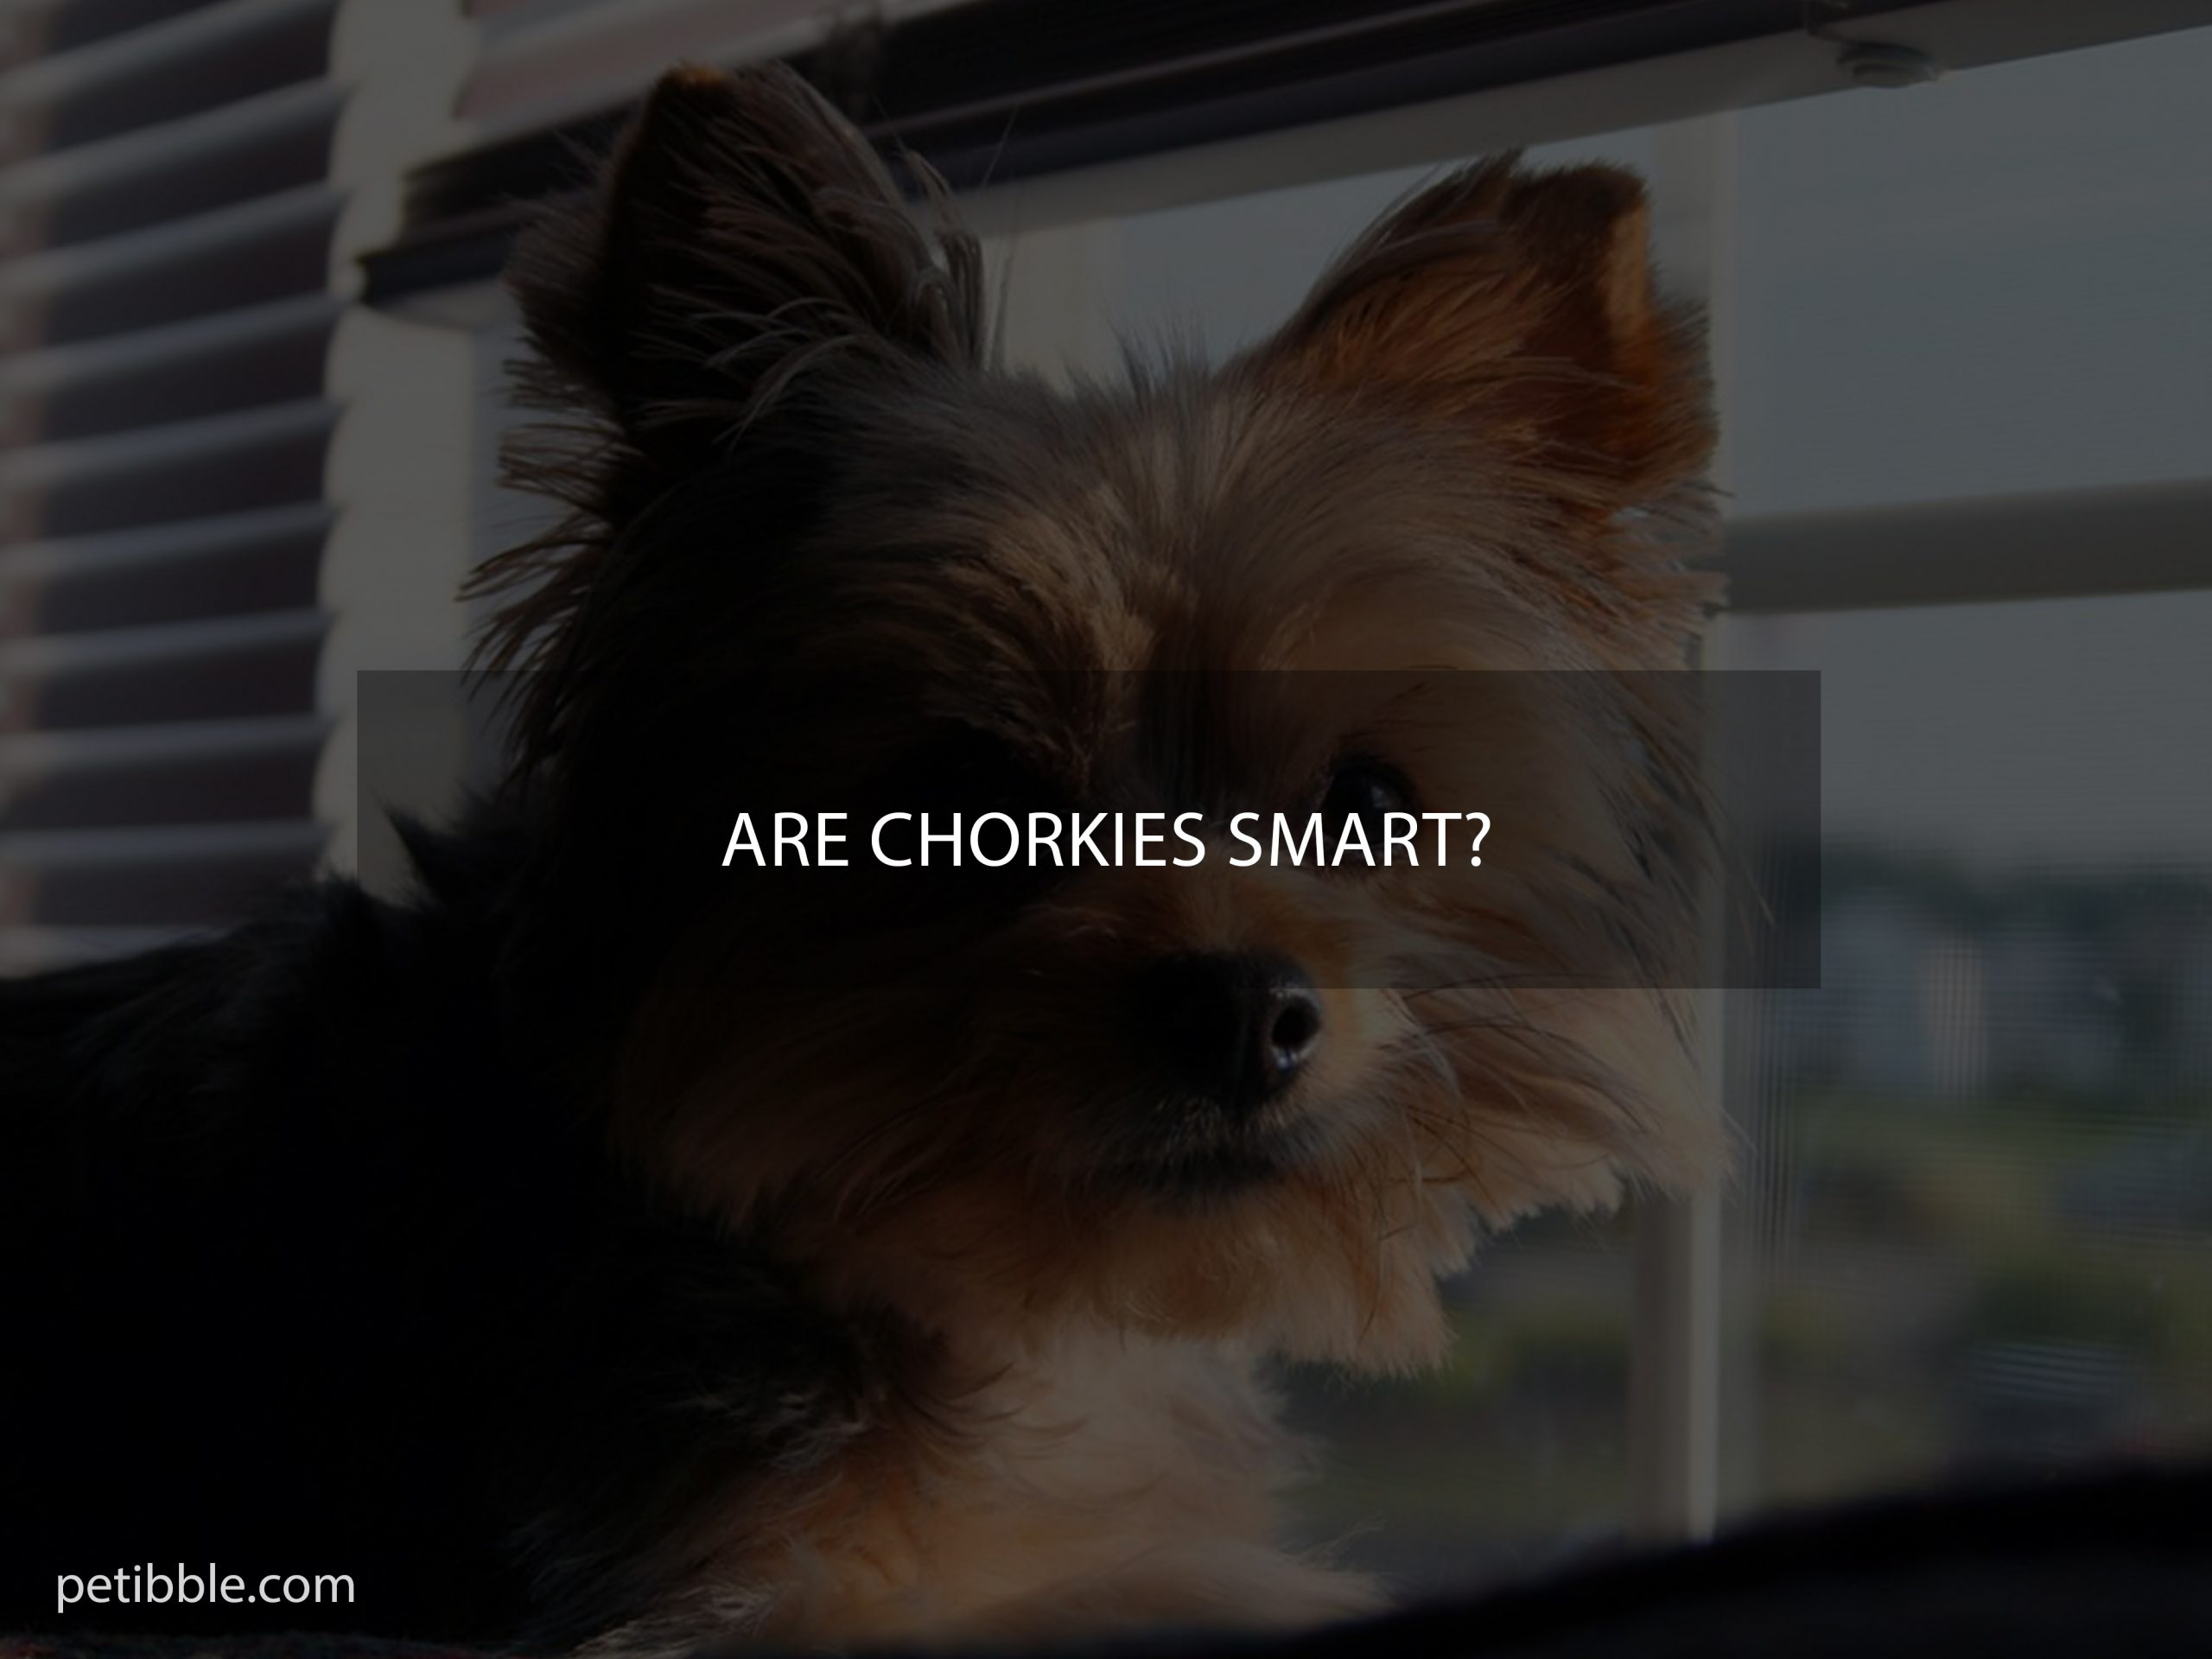  Are Chorkies smart?